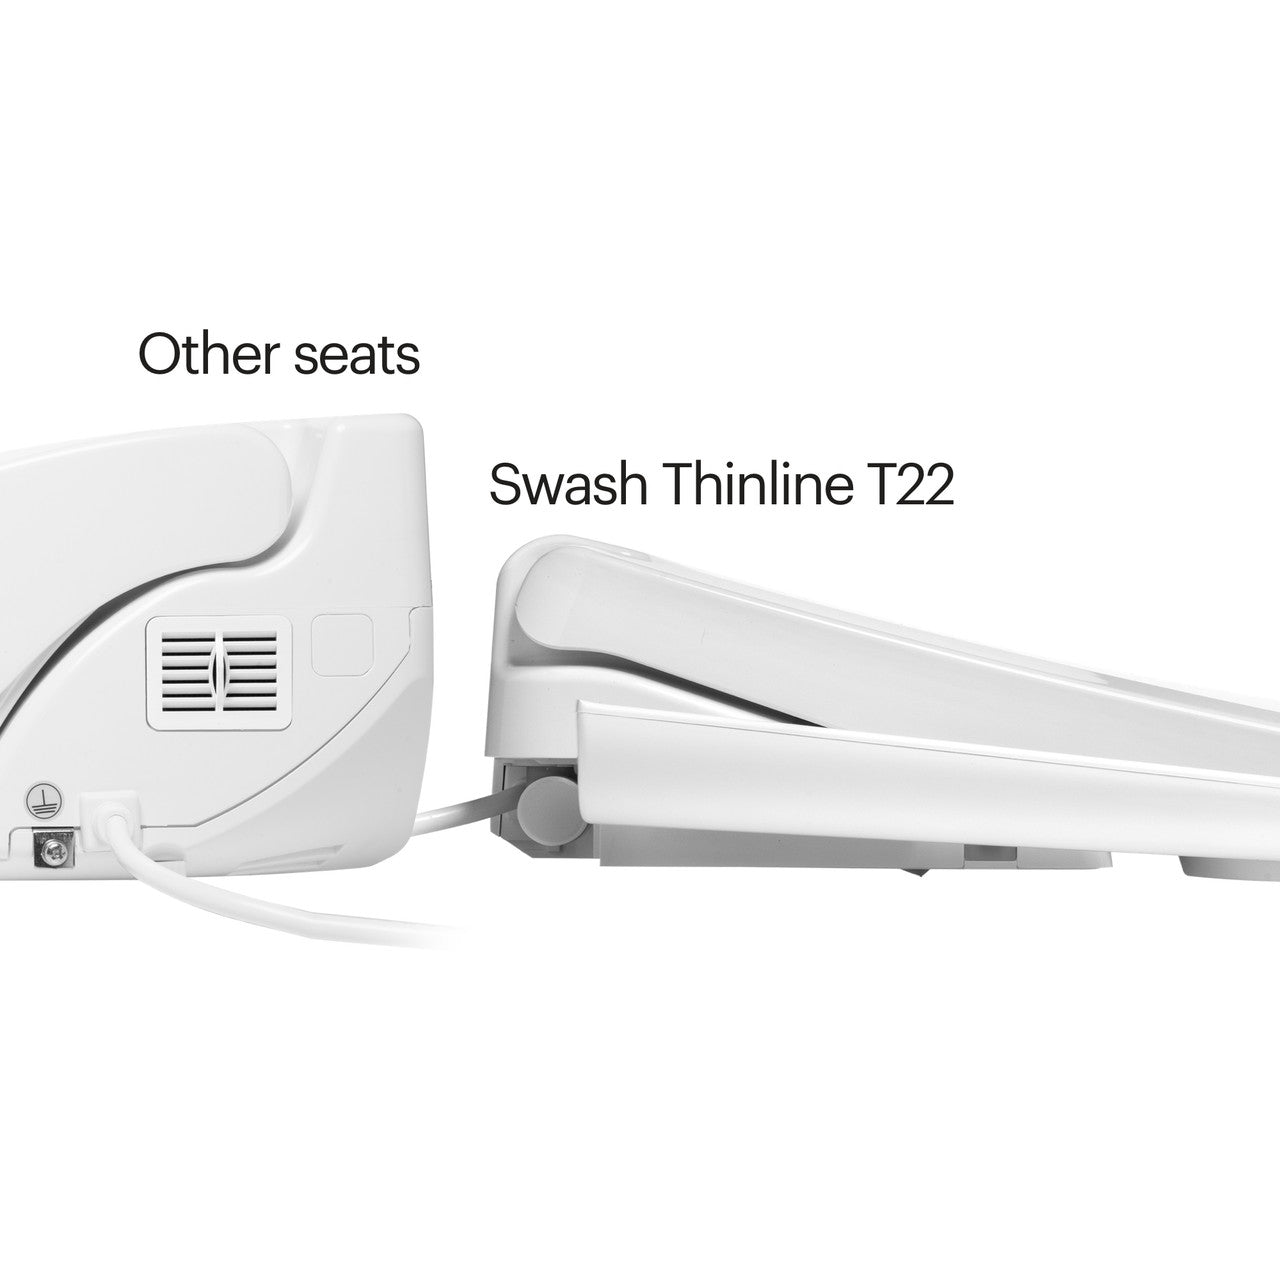 Brondell Swash Thinline T22 Luxury Bidet Seat - Side Arm Control